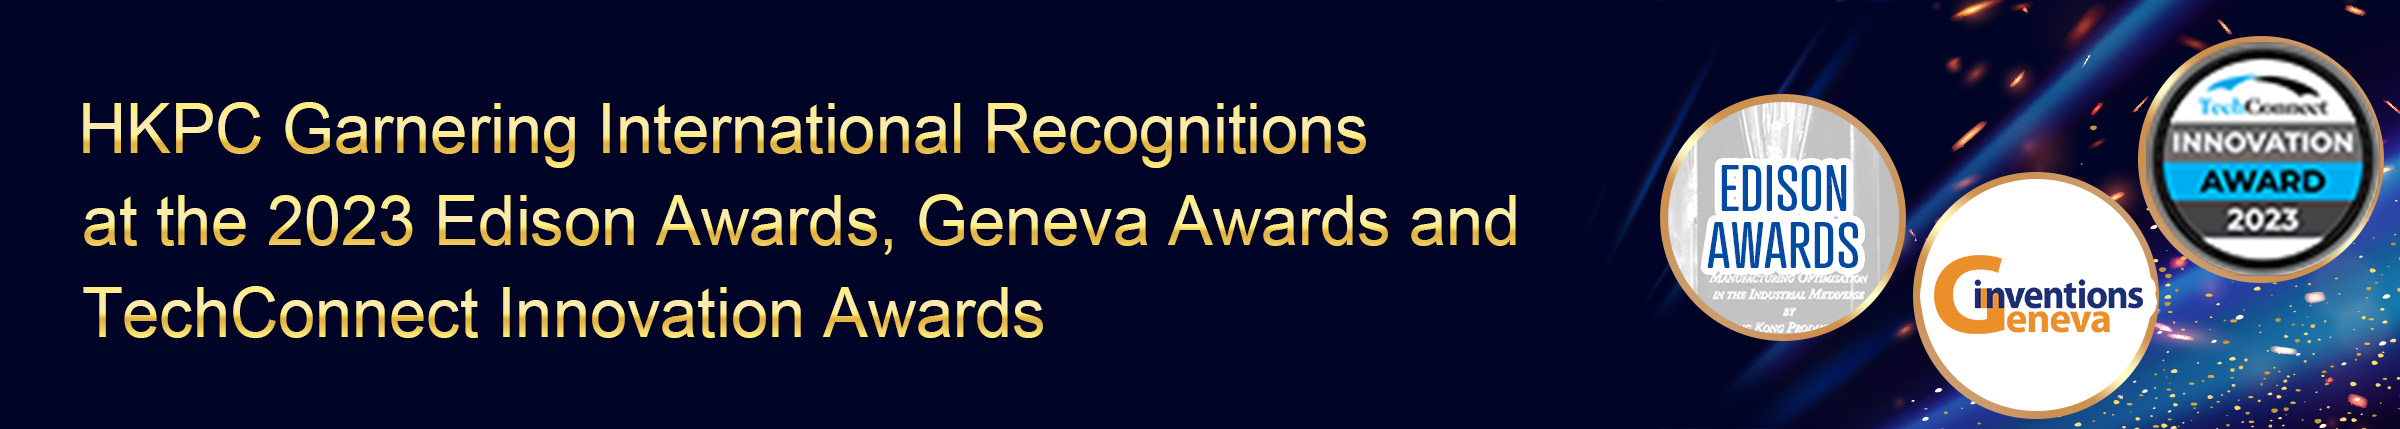 HKPC Garnering International Recognitions at the 2023 Edison Awards, Geneva Awards and TechConnect Innovation Awards